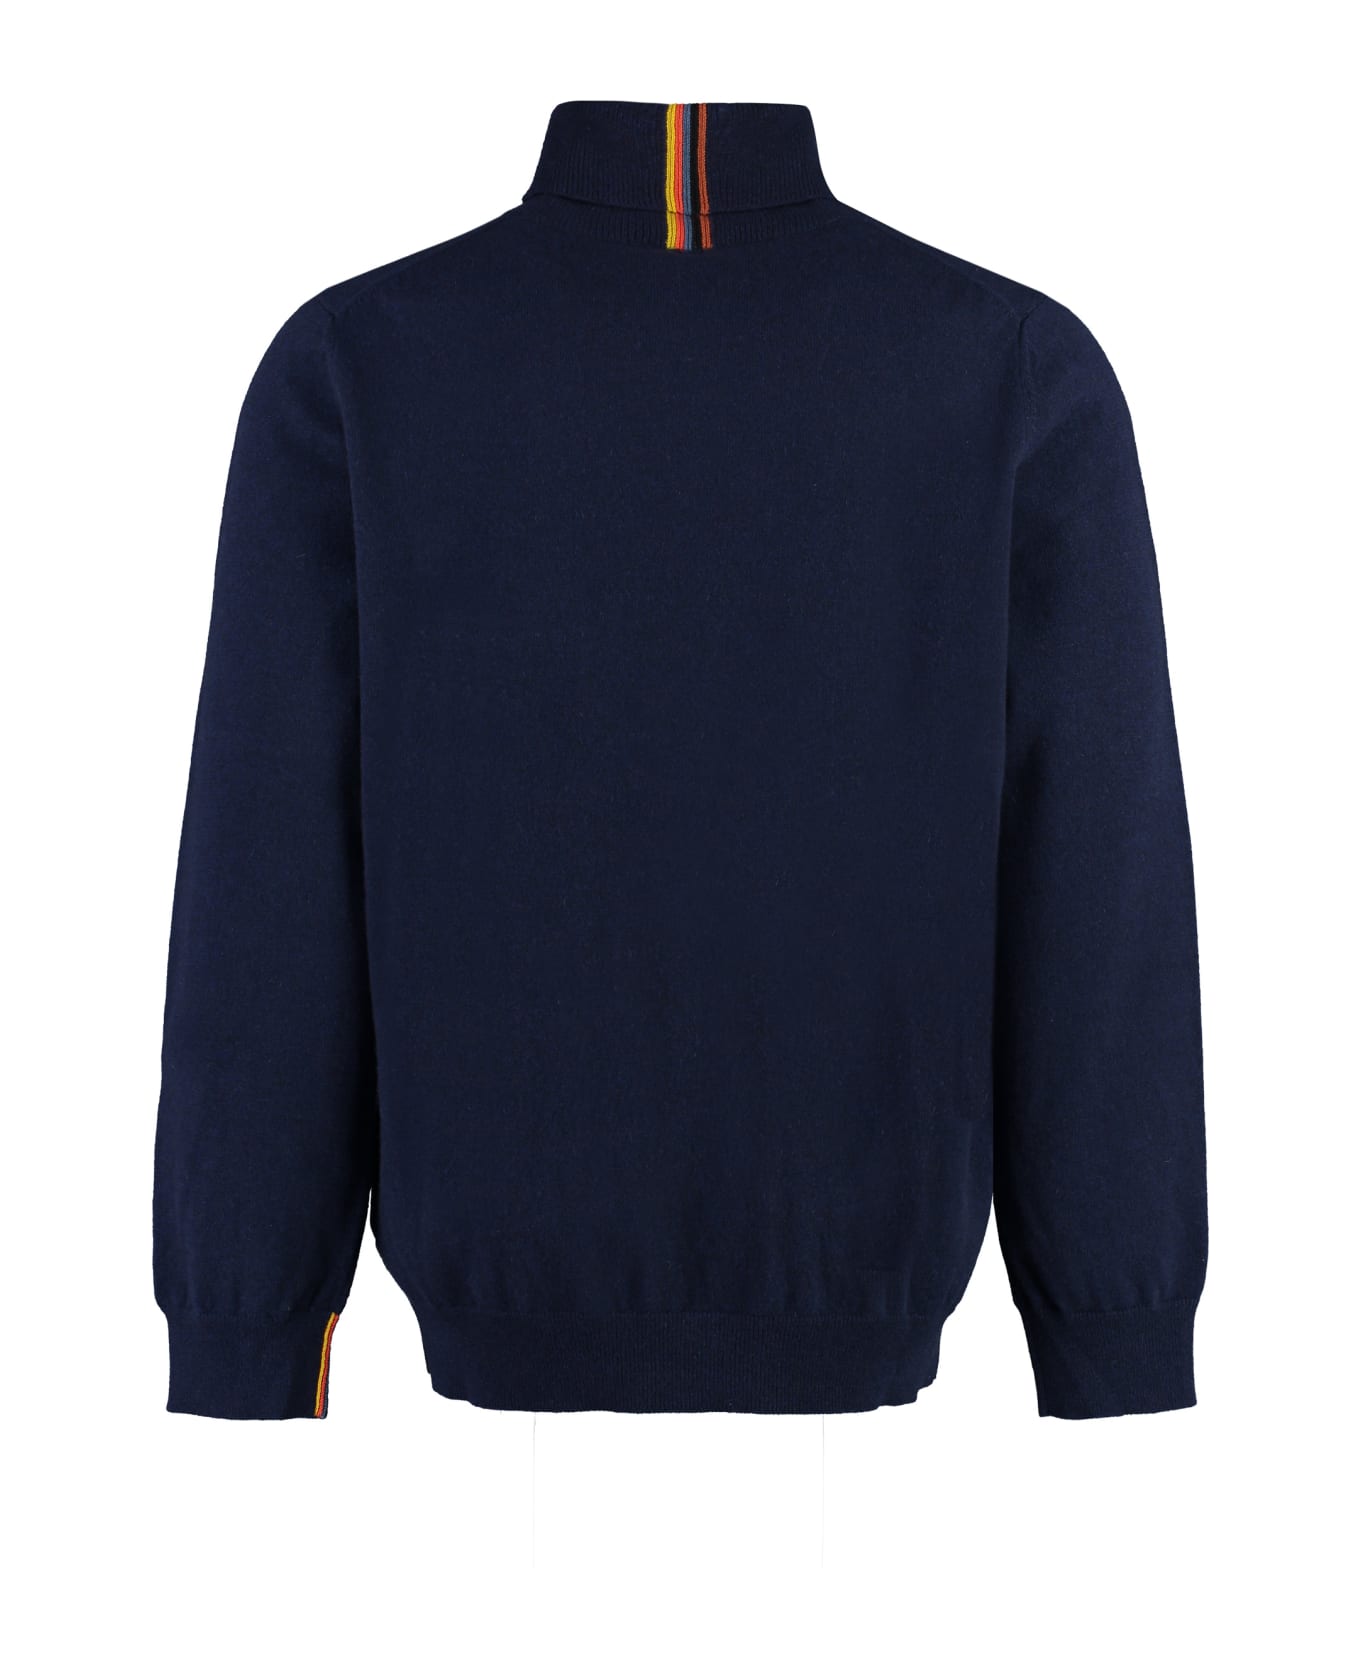 Paul Smith Cashmere Turtleneck Sweater - blue ニットウェア